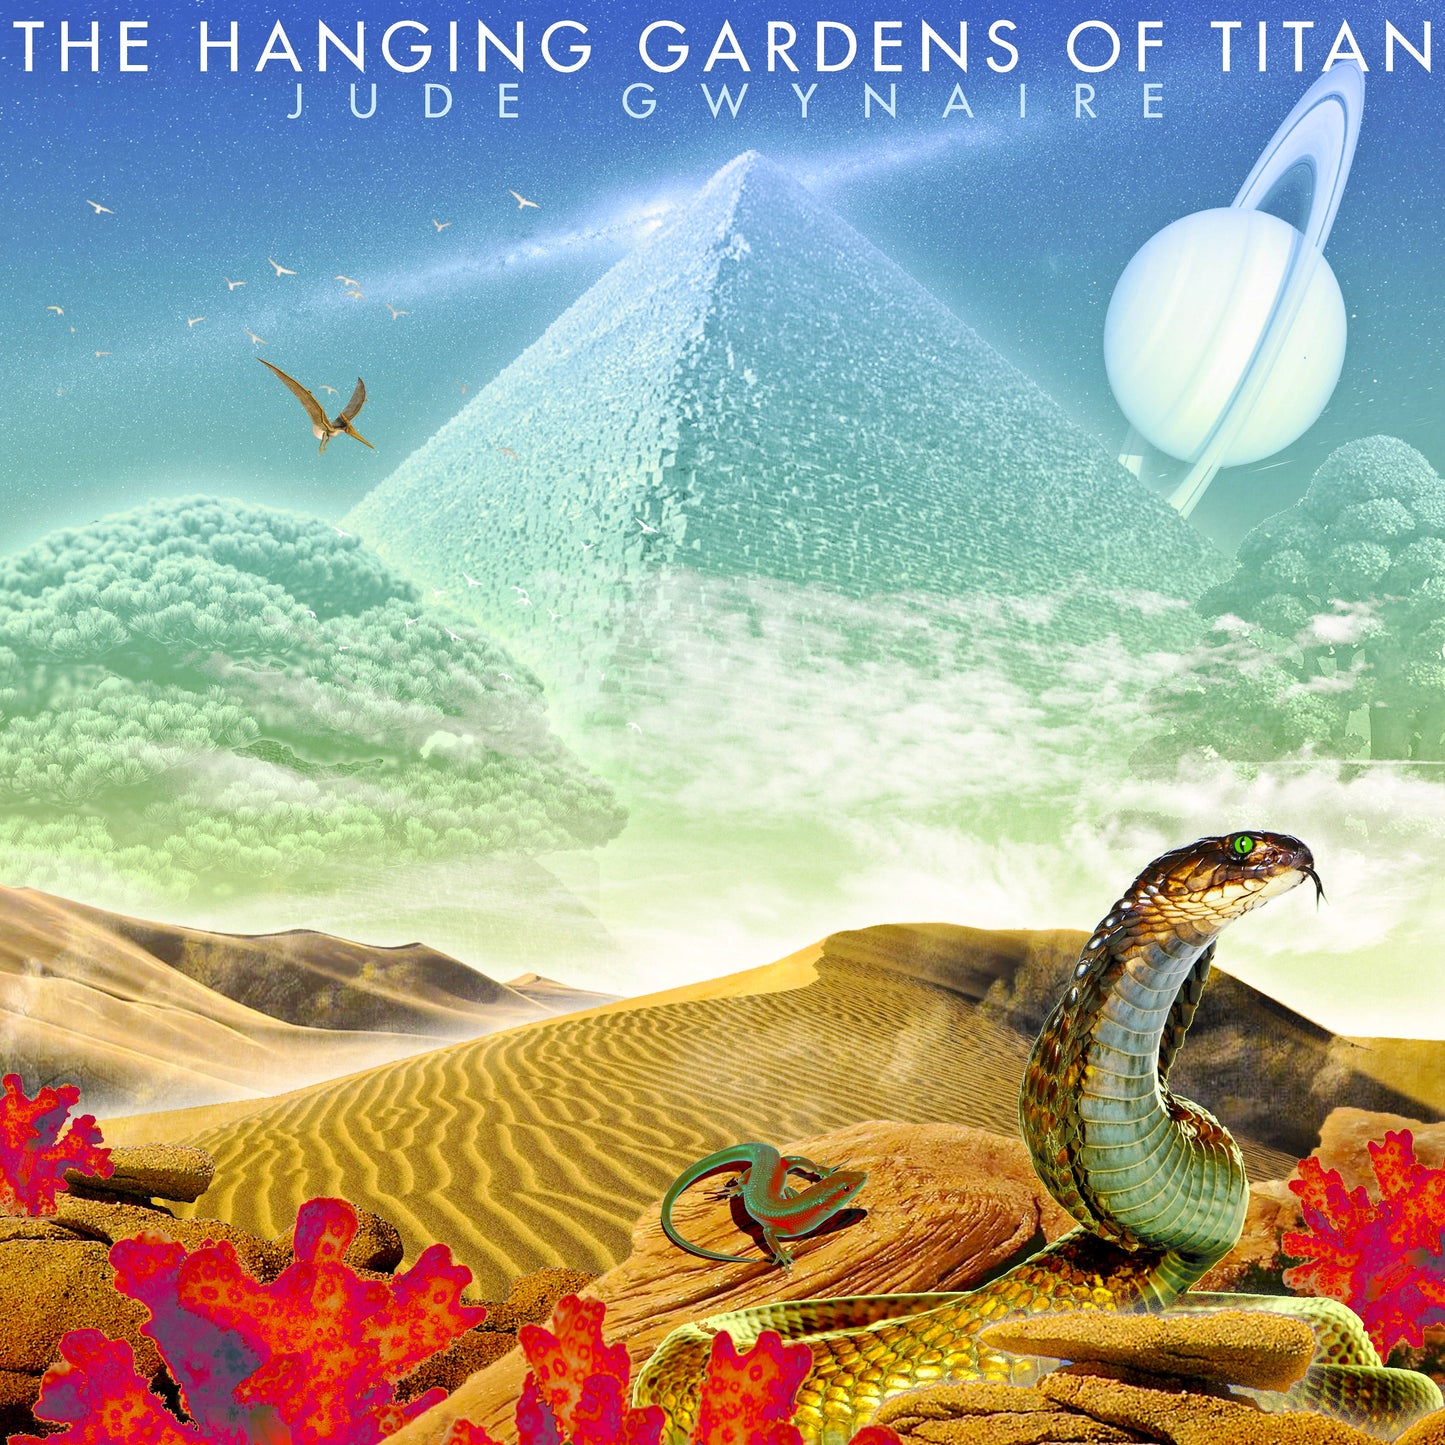 The Hanging Gardens of Titan